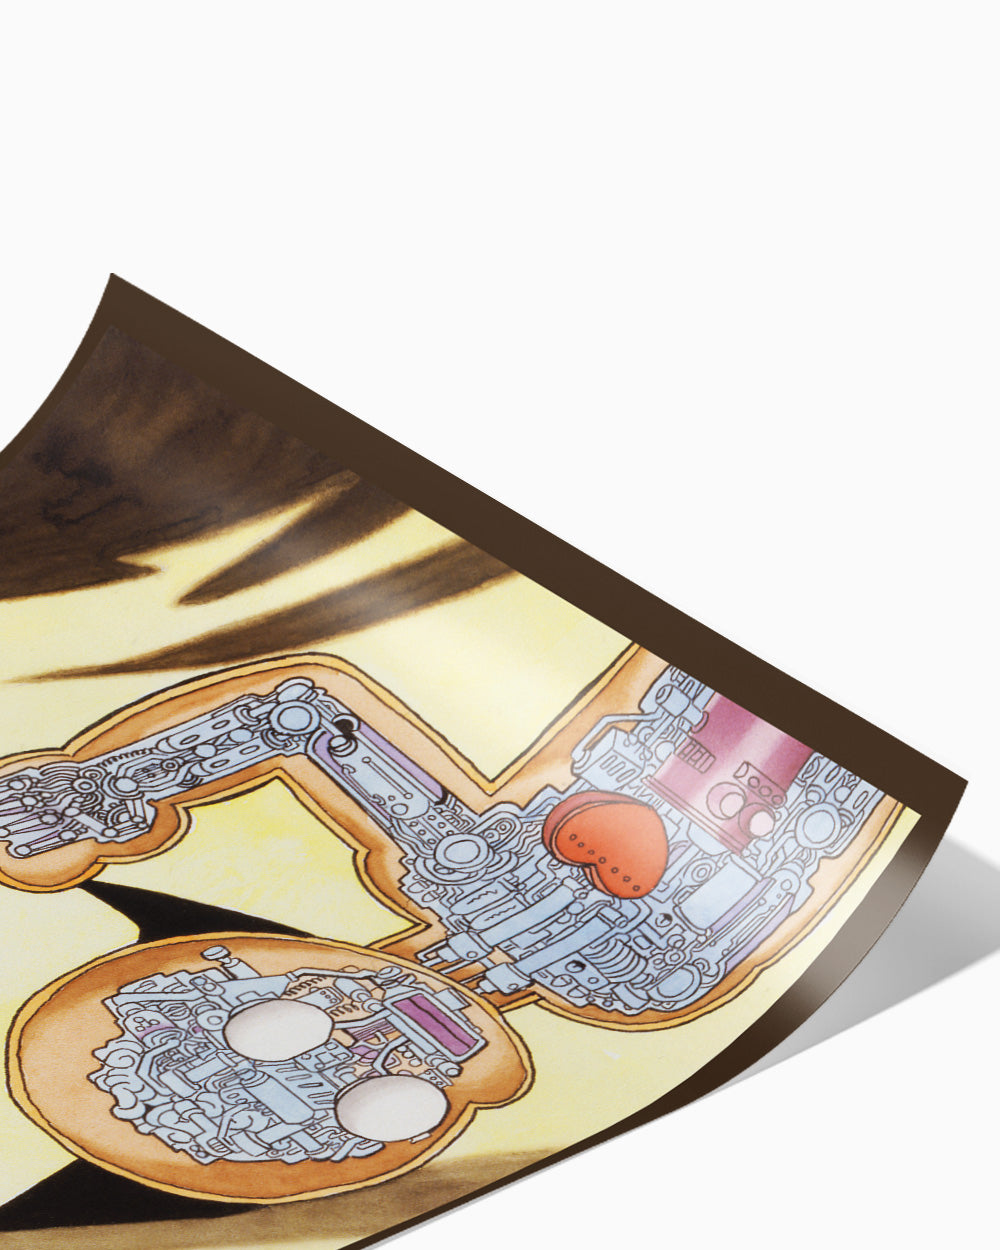 Astro Boy Internal Art Print